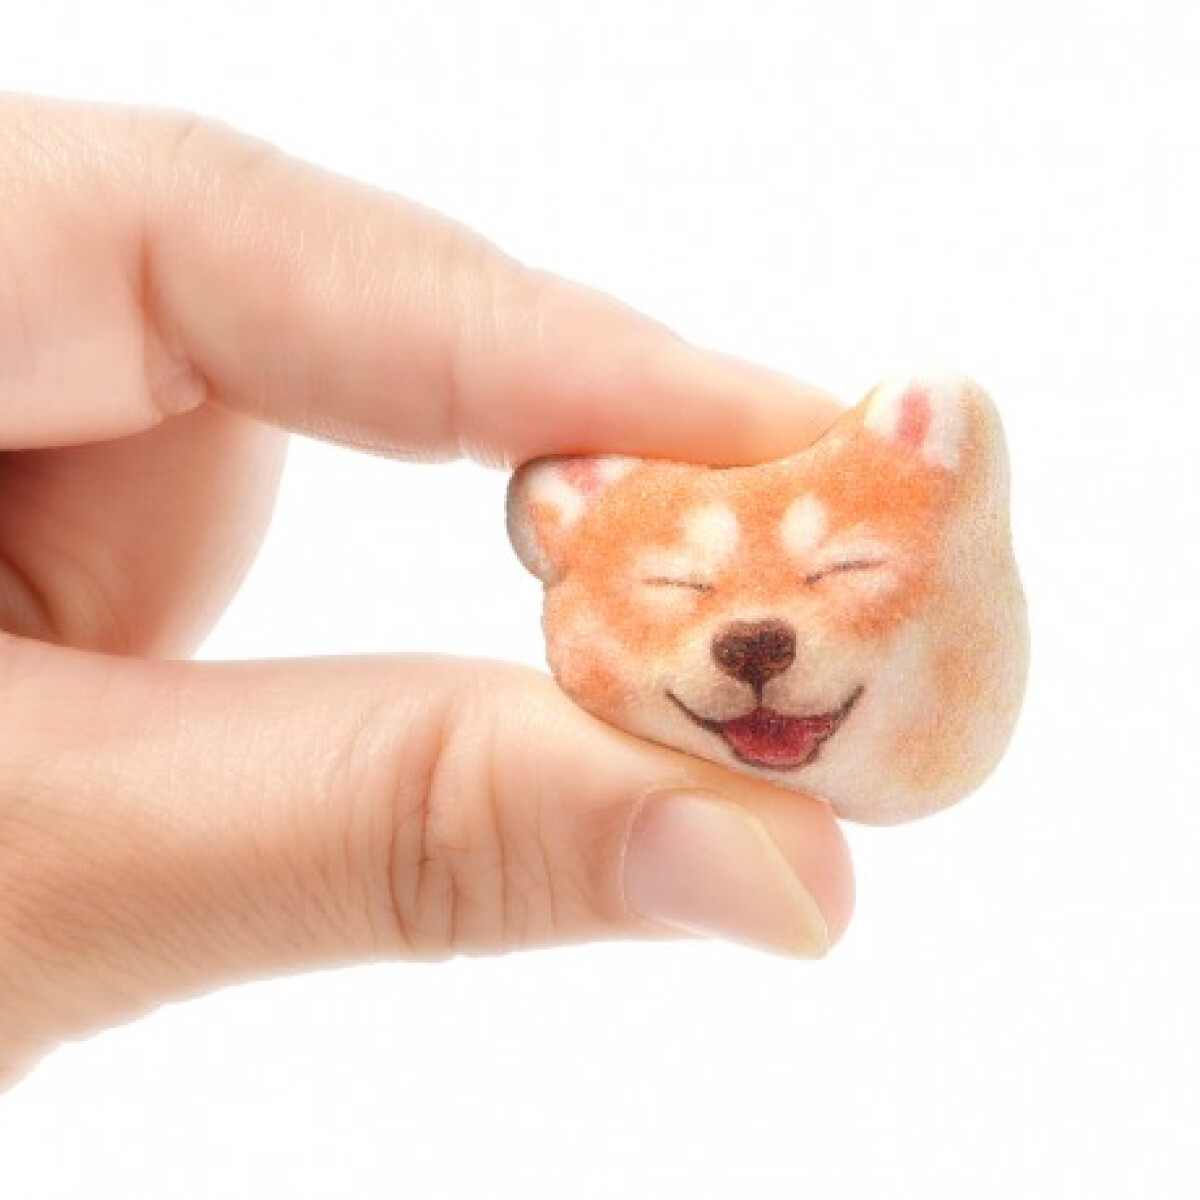 Mini, pihe-puha shiba inus pillecukrokat dobtak piacra a japánok